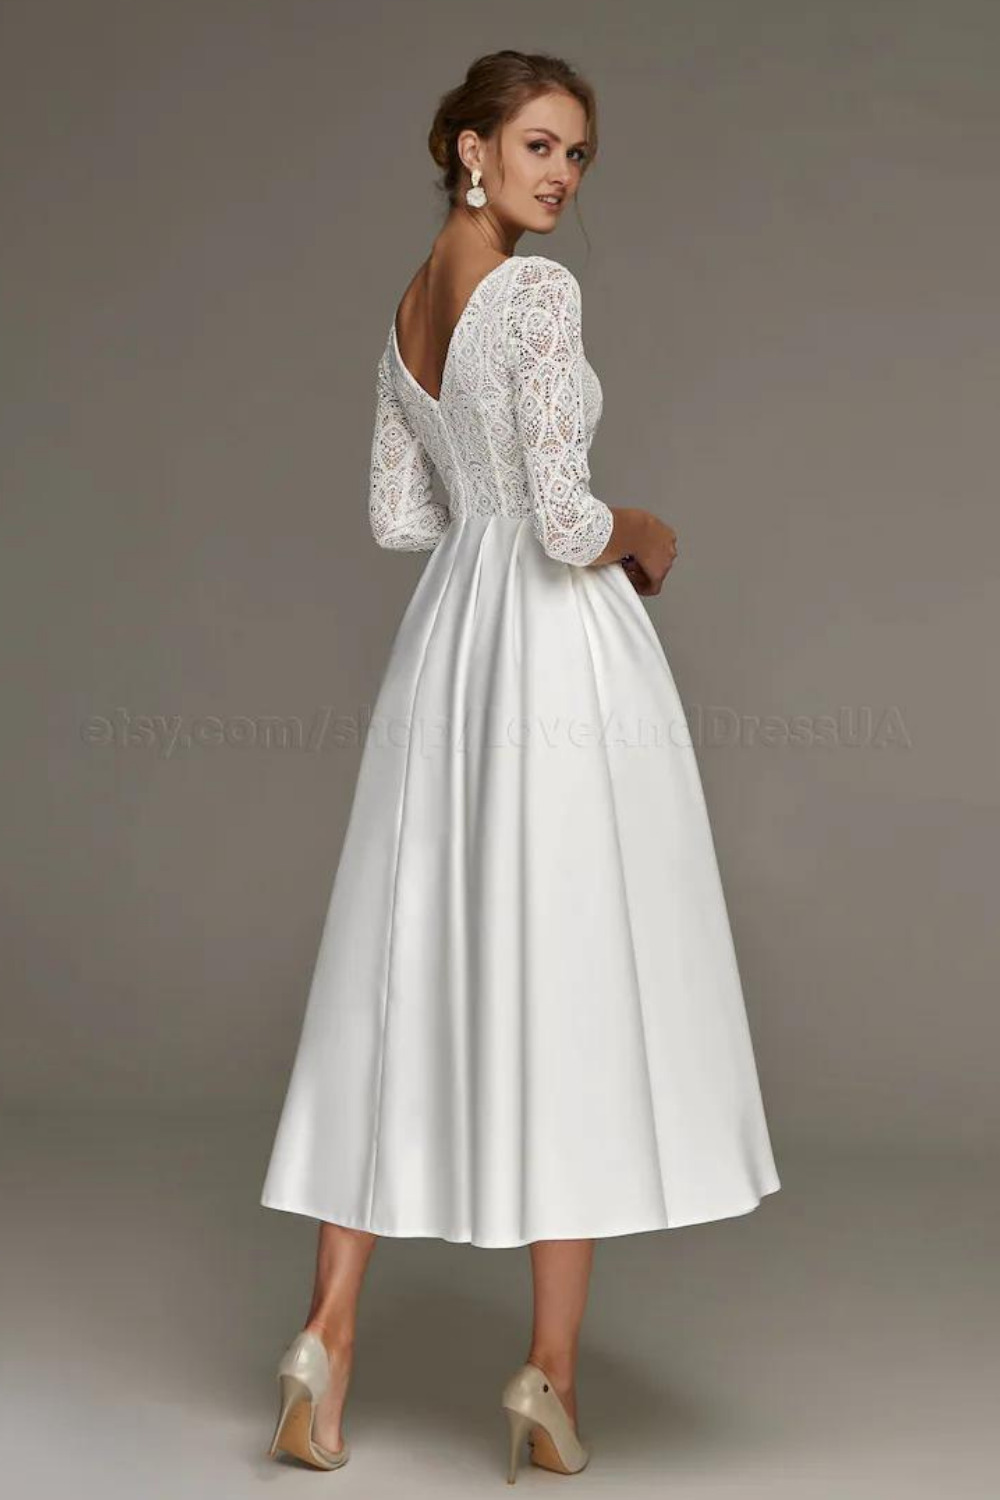 Wedding Dresses For Short Women: How To Choose The One! | Filosofashion ...